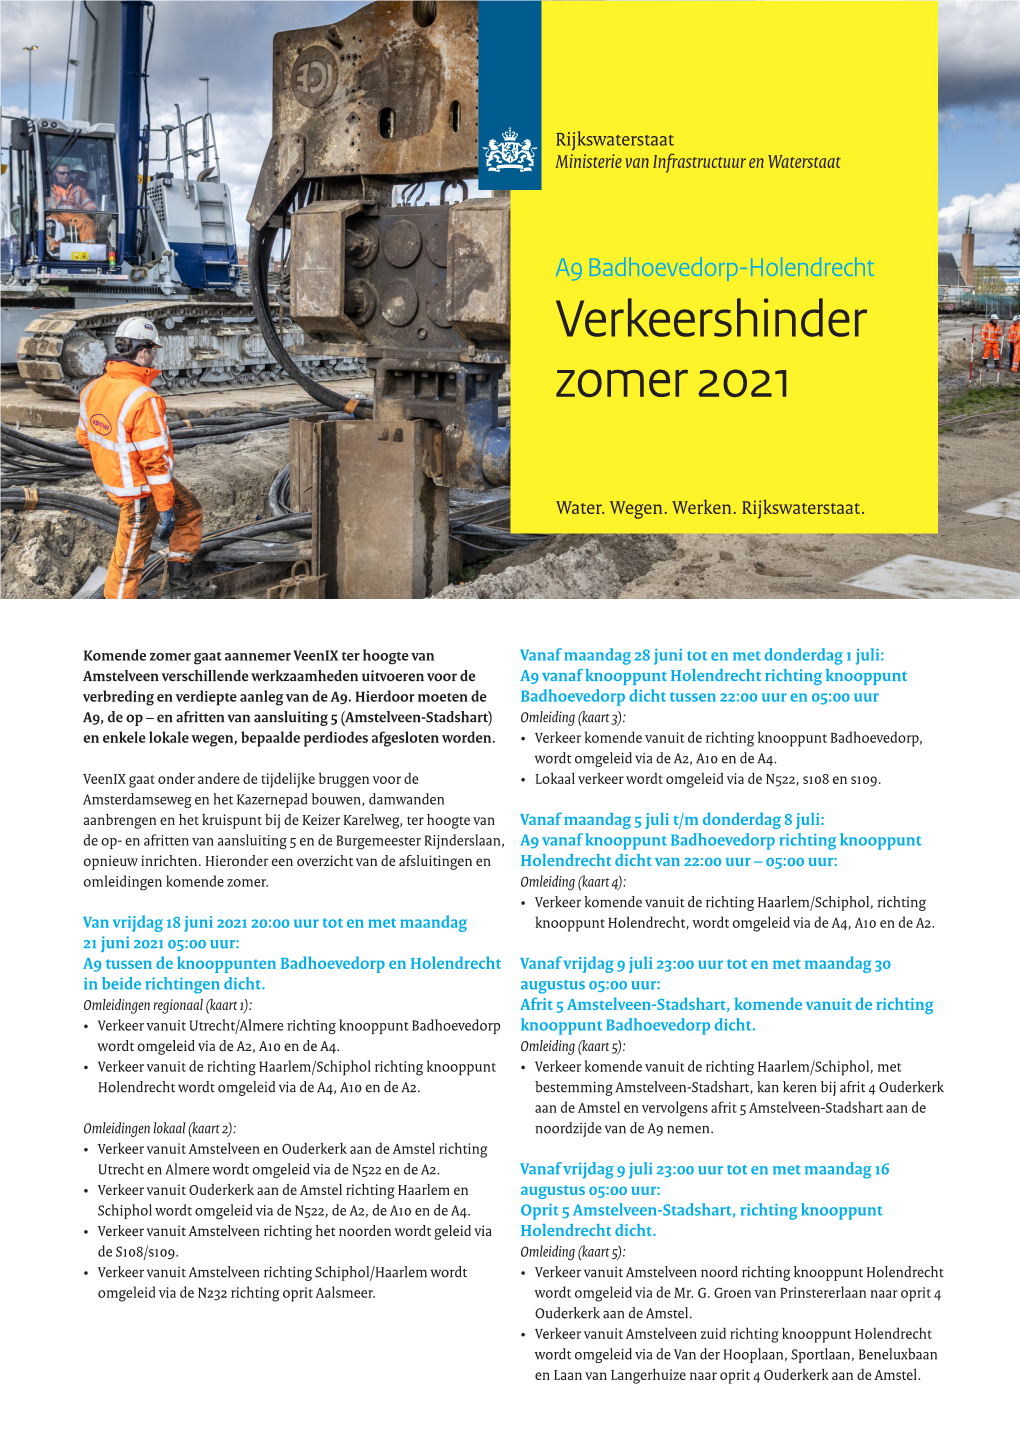 A9 Badhoevedorp-Holendrecht Verkeershinder Zomer 2021